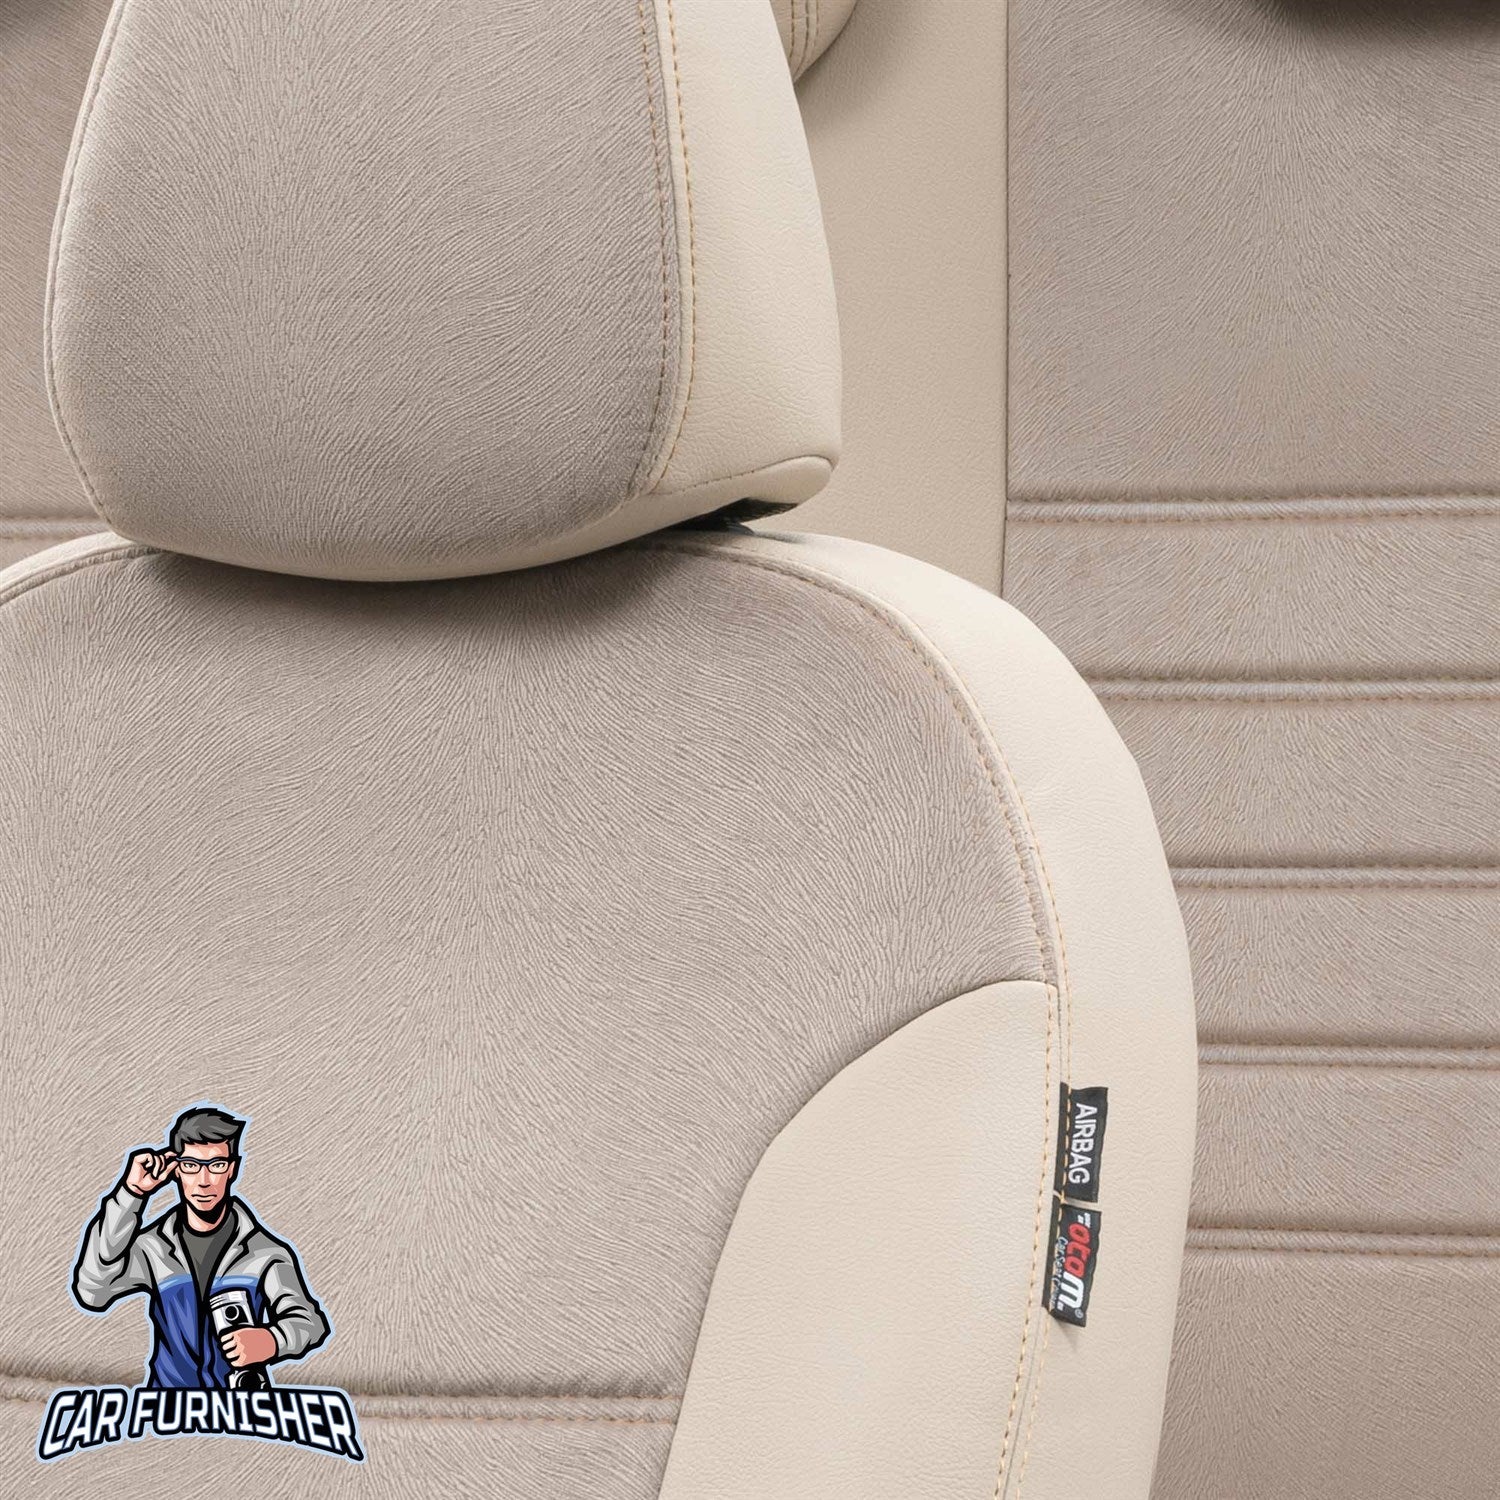 Audi A1 Car Seat Cover 2011-2016 Custom Made London Design Beige Full Set (5 Seats + Handrest) Leather & Fabric